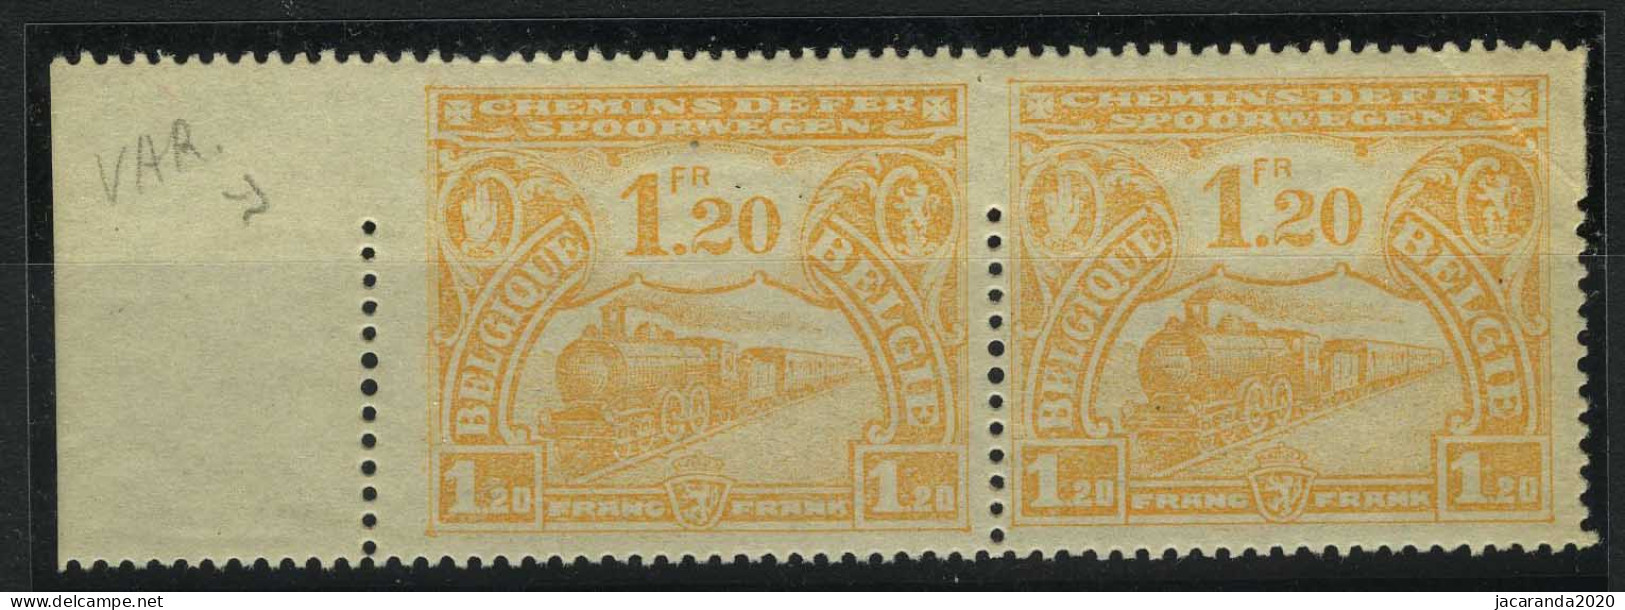 België TR117 **/* - Spoorwegzegel Met Tandingfout - Timbre Chemins De Fer Avec Erreur De Perforation - 1901-1930